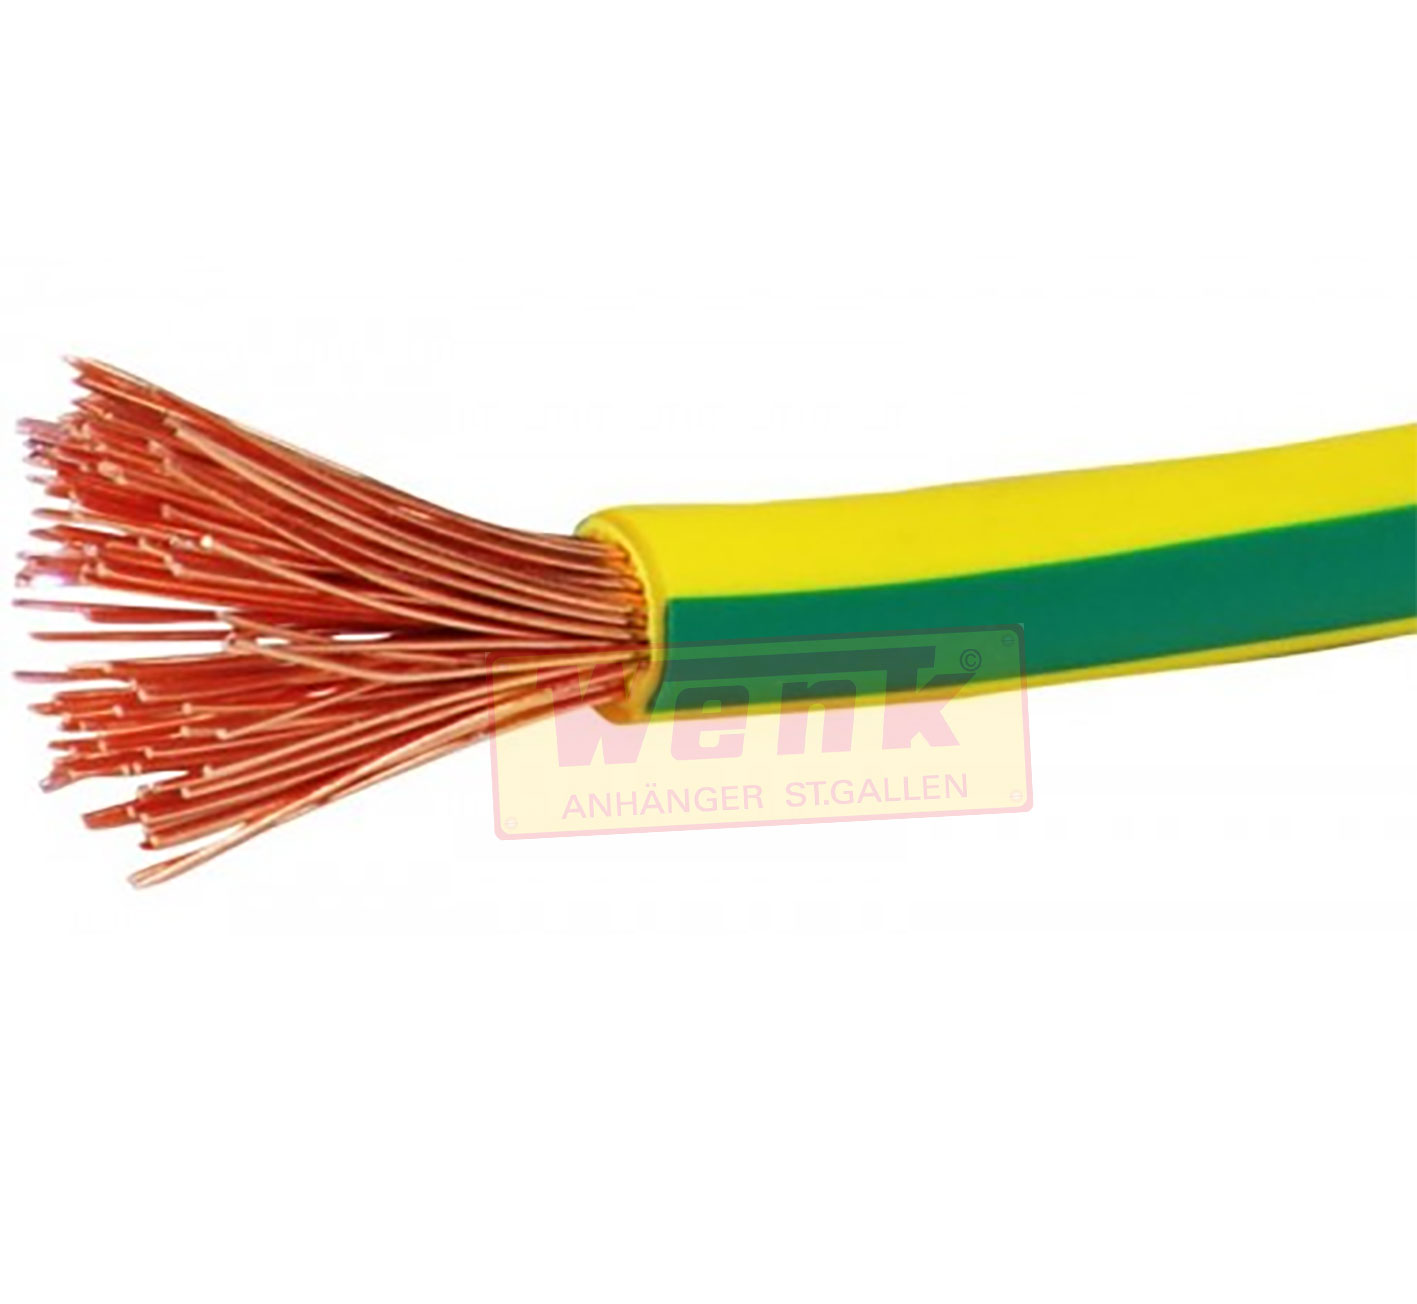 Kabel T-Litze Eca 6qmm gelb-grün H07 V-K